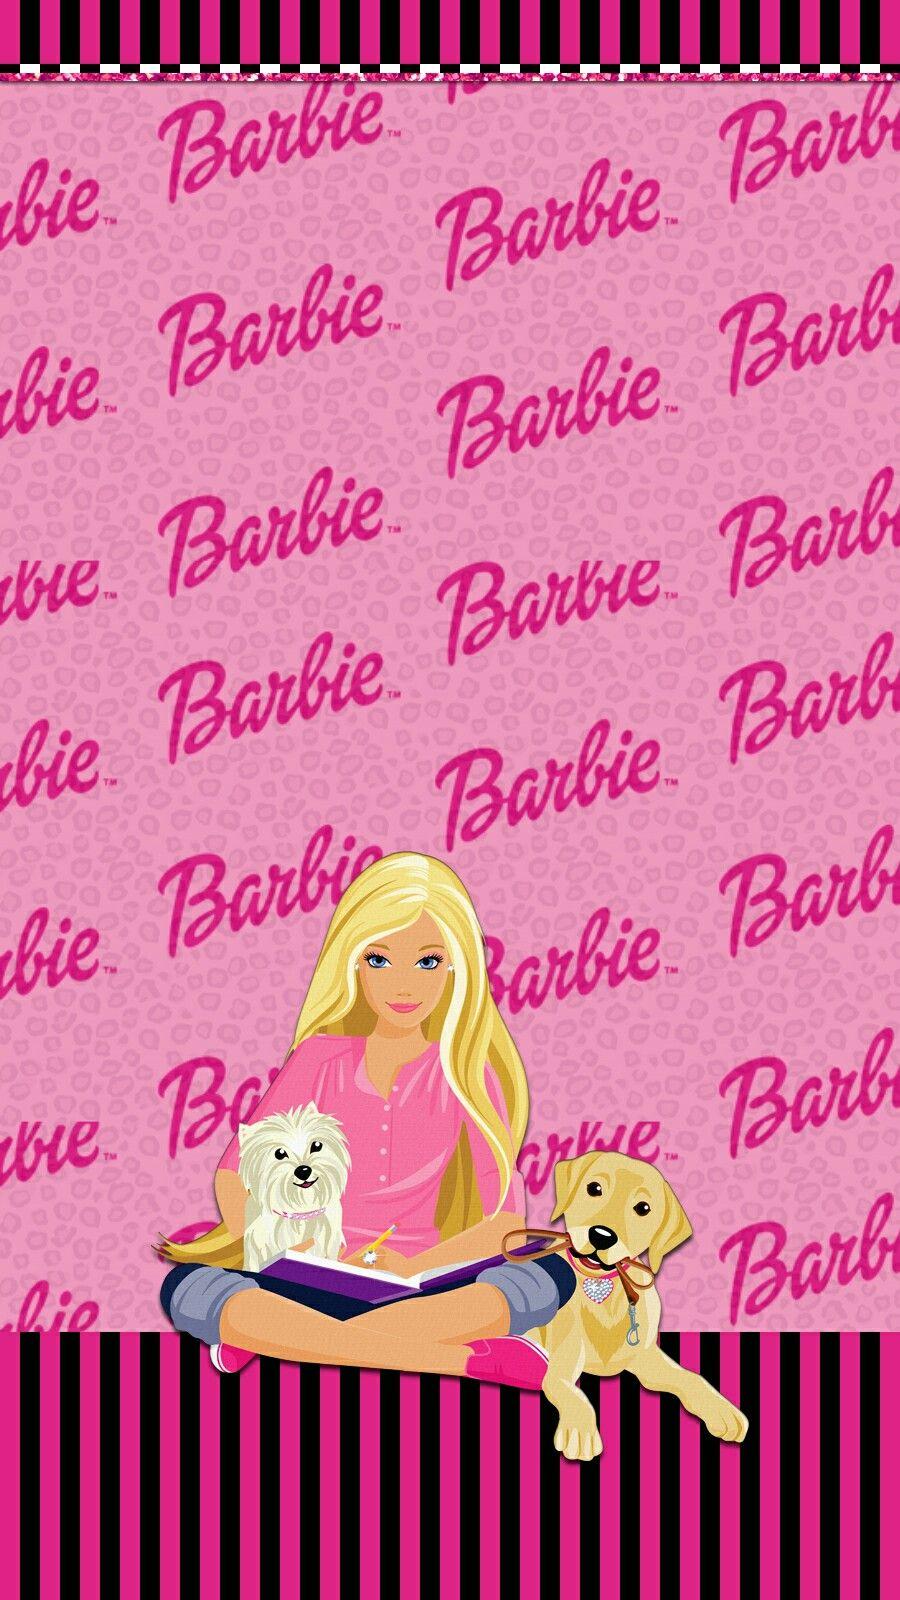 Barbie. girly wallpaper. Wallpaper, Mobile wallpaper